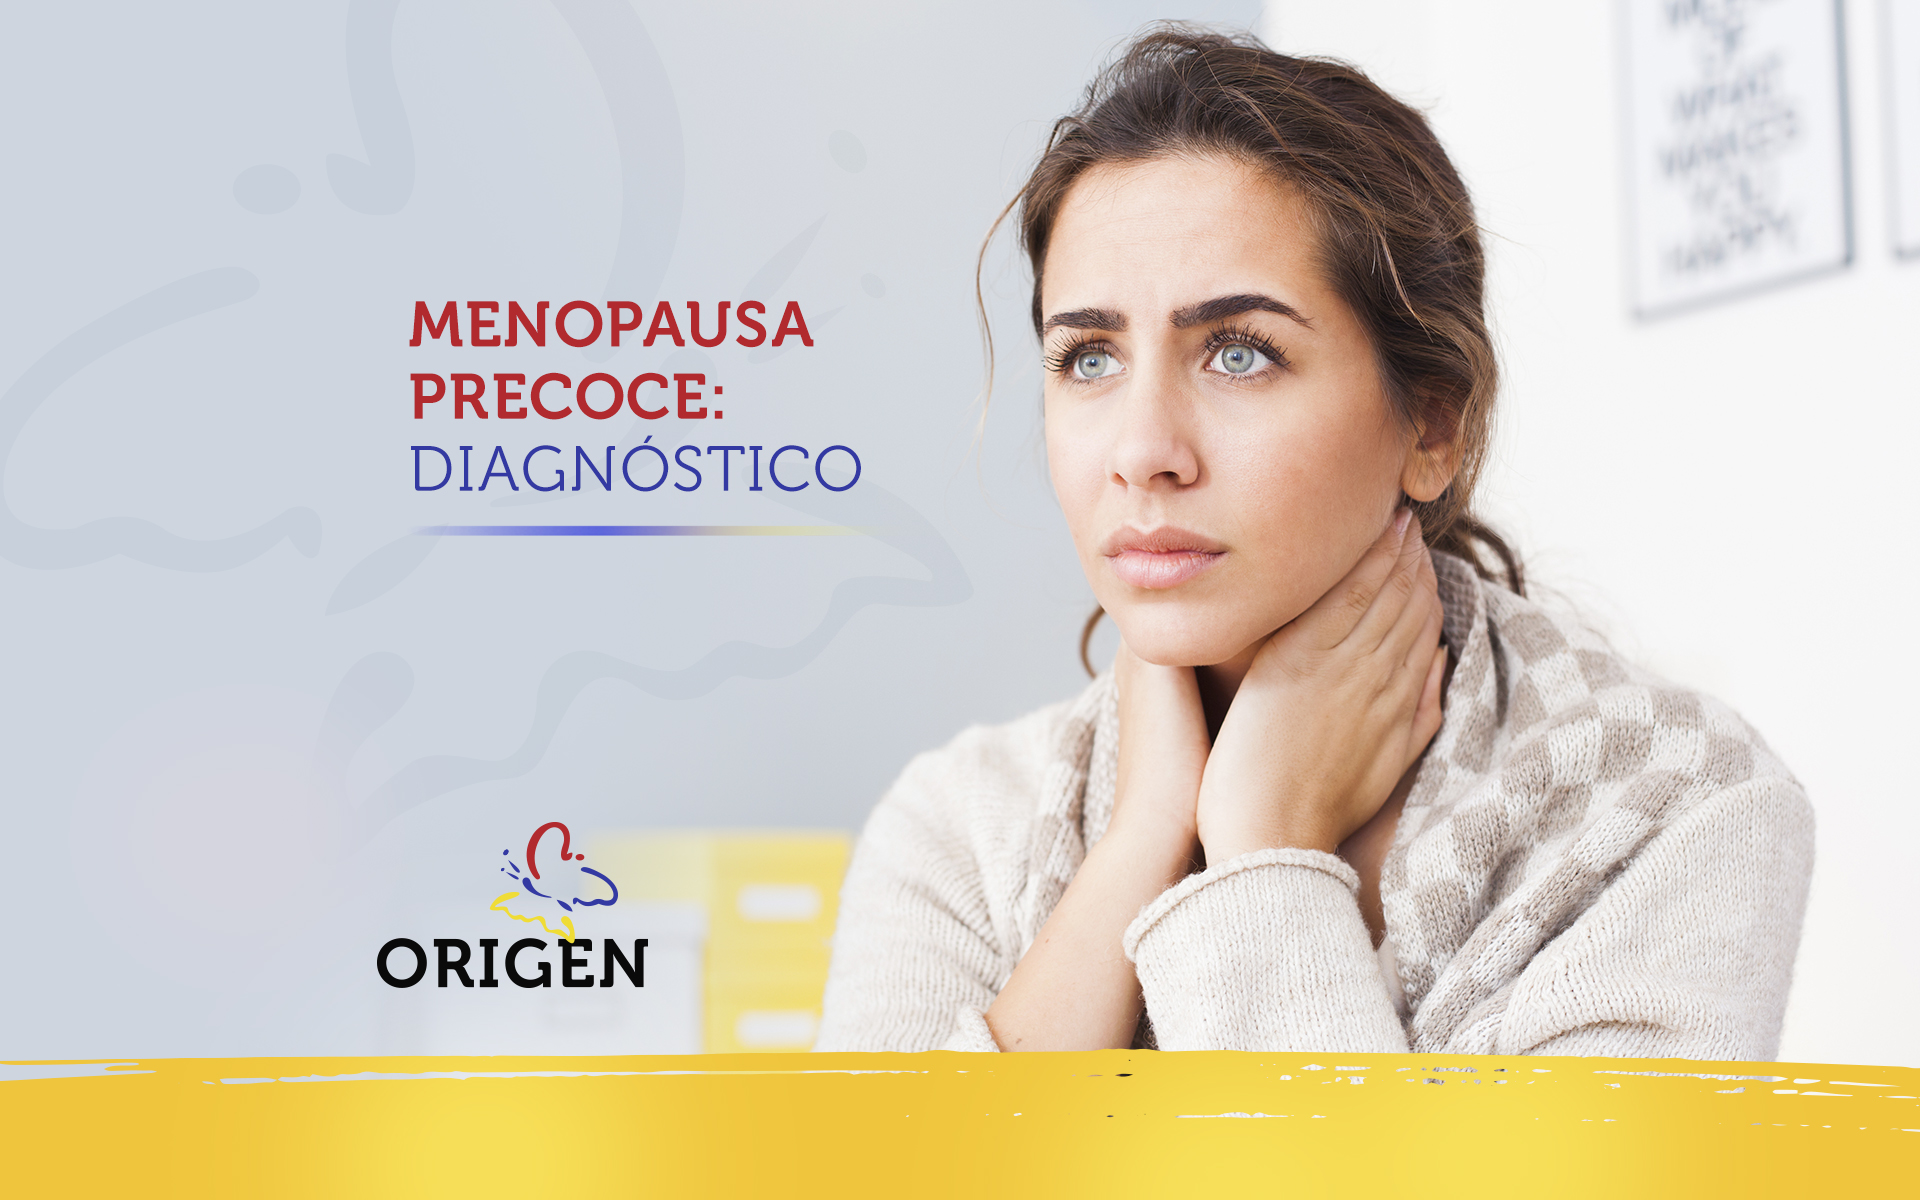 Menopausa precoce: diagnóstico